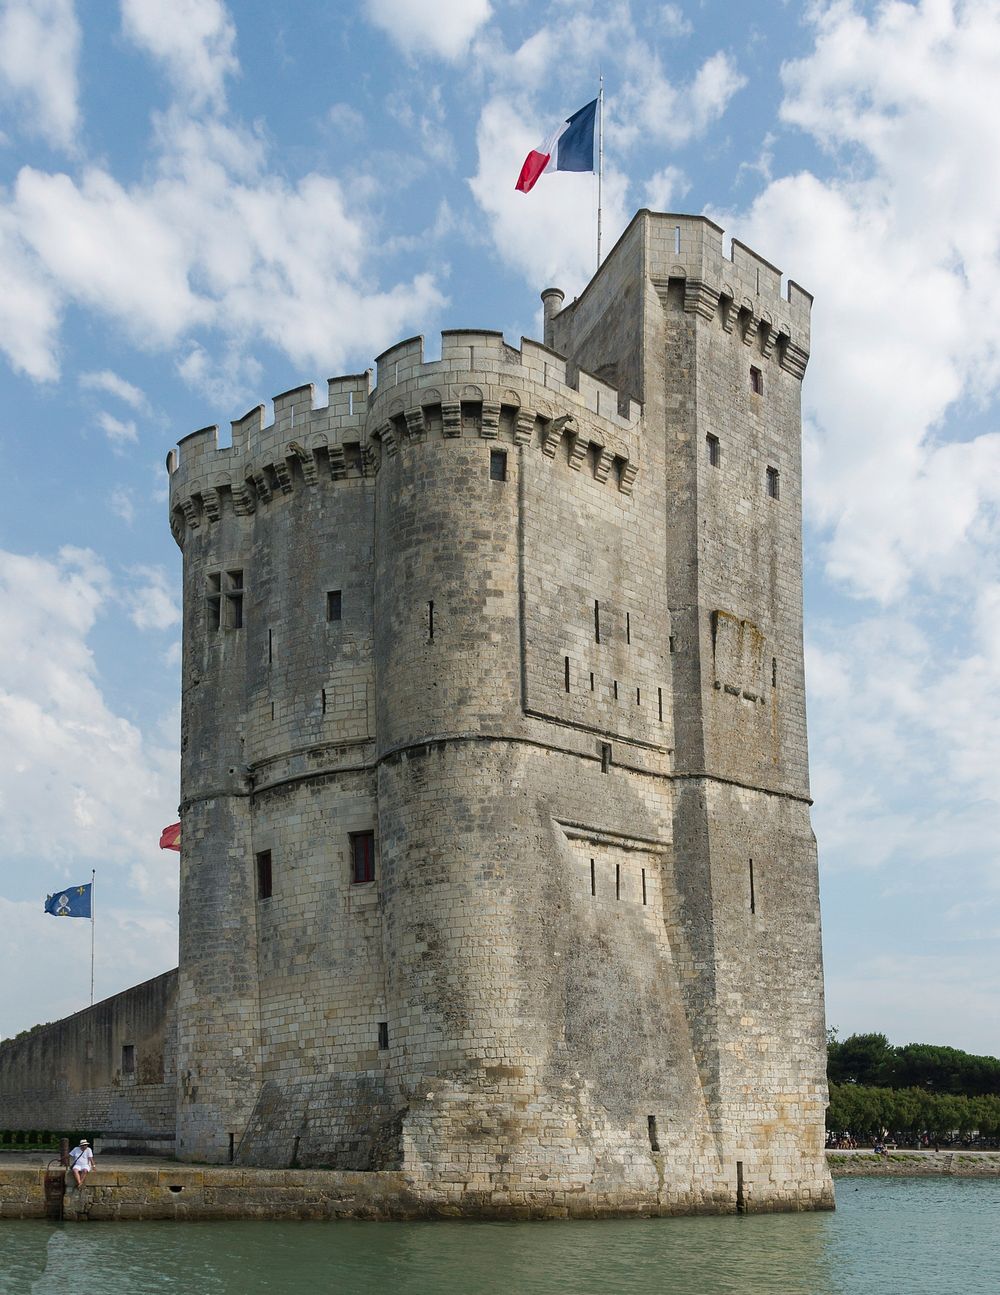 Tour Saint-Nicolas, old harbor of La Rochelle, Charente-Maritime, France. Original public domain image from Wikimedia Commons